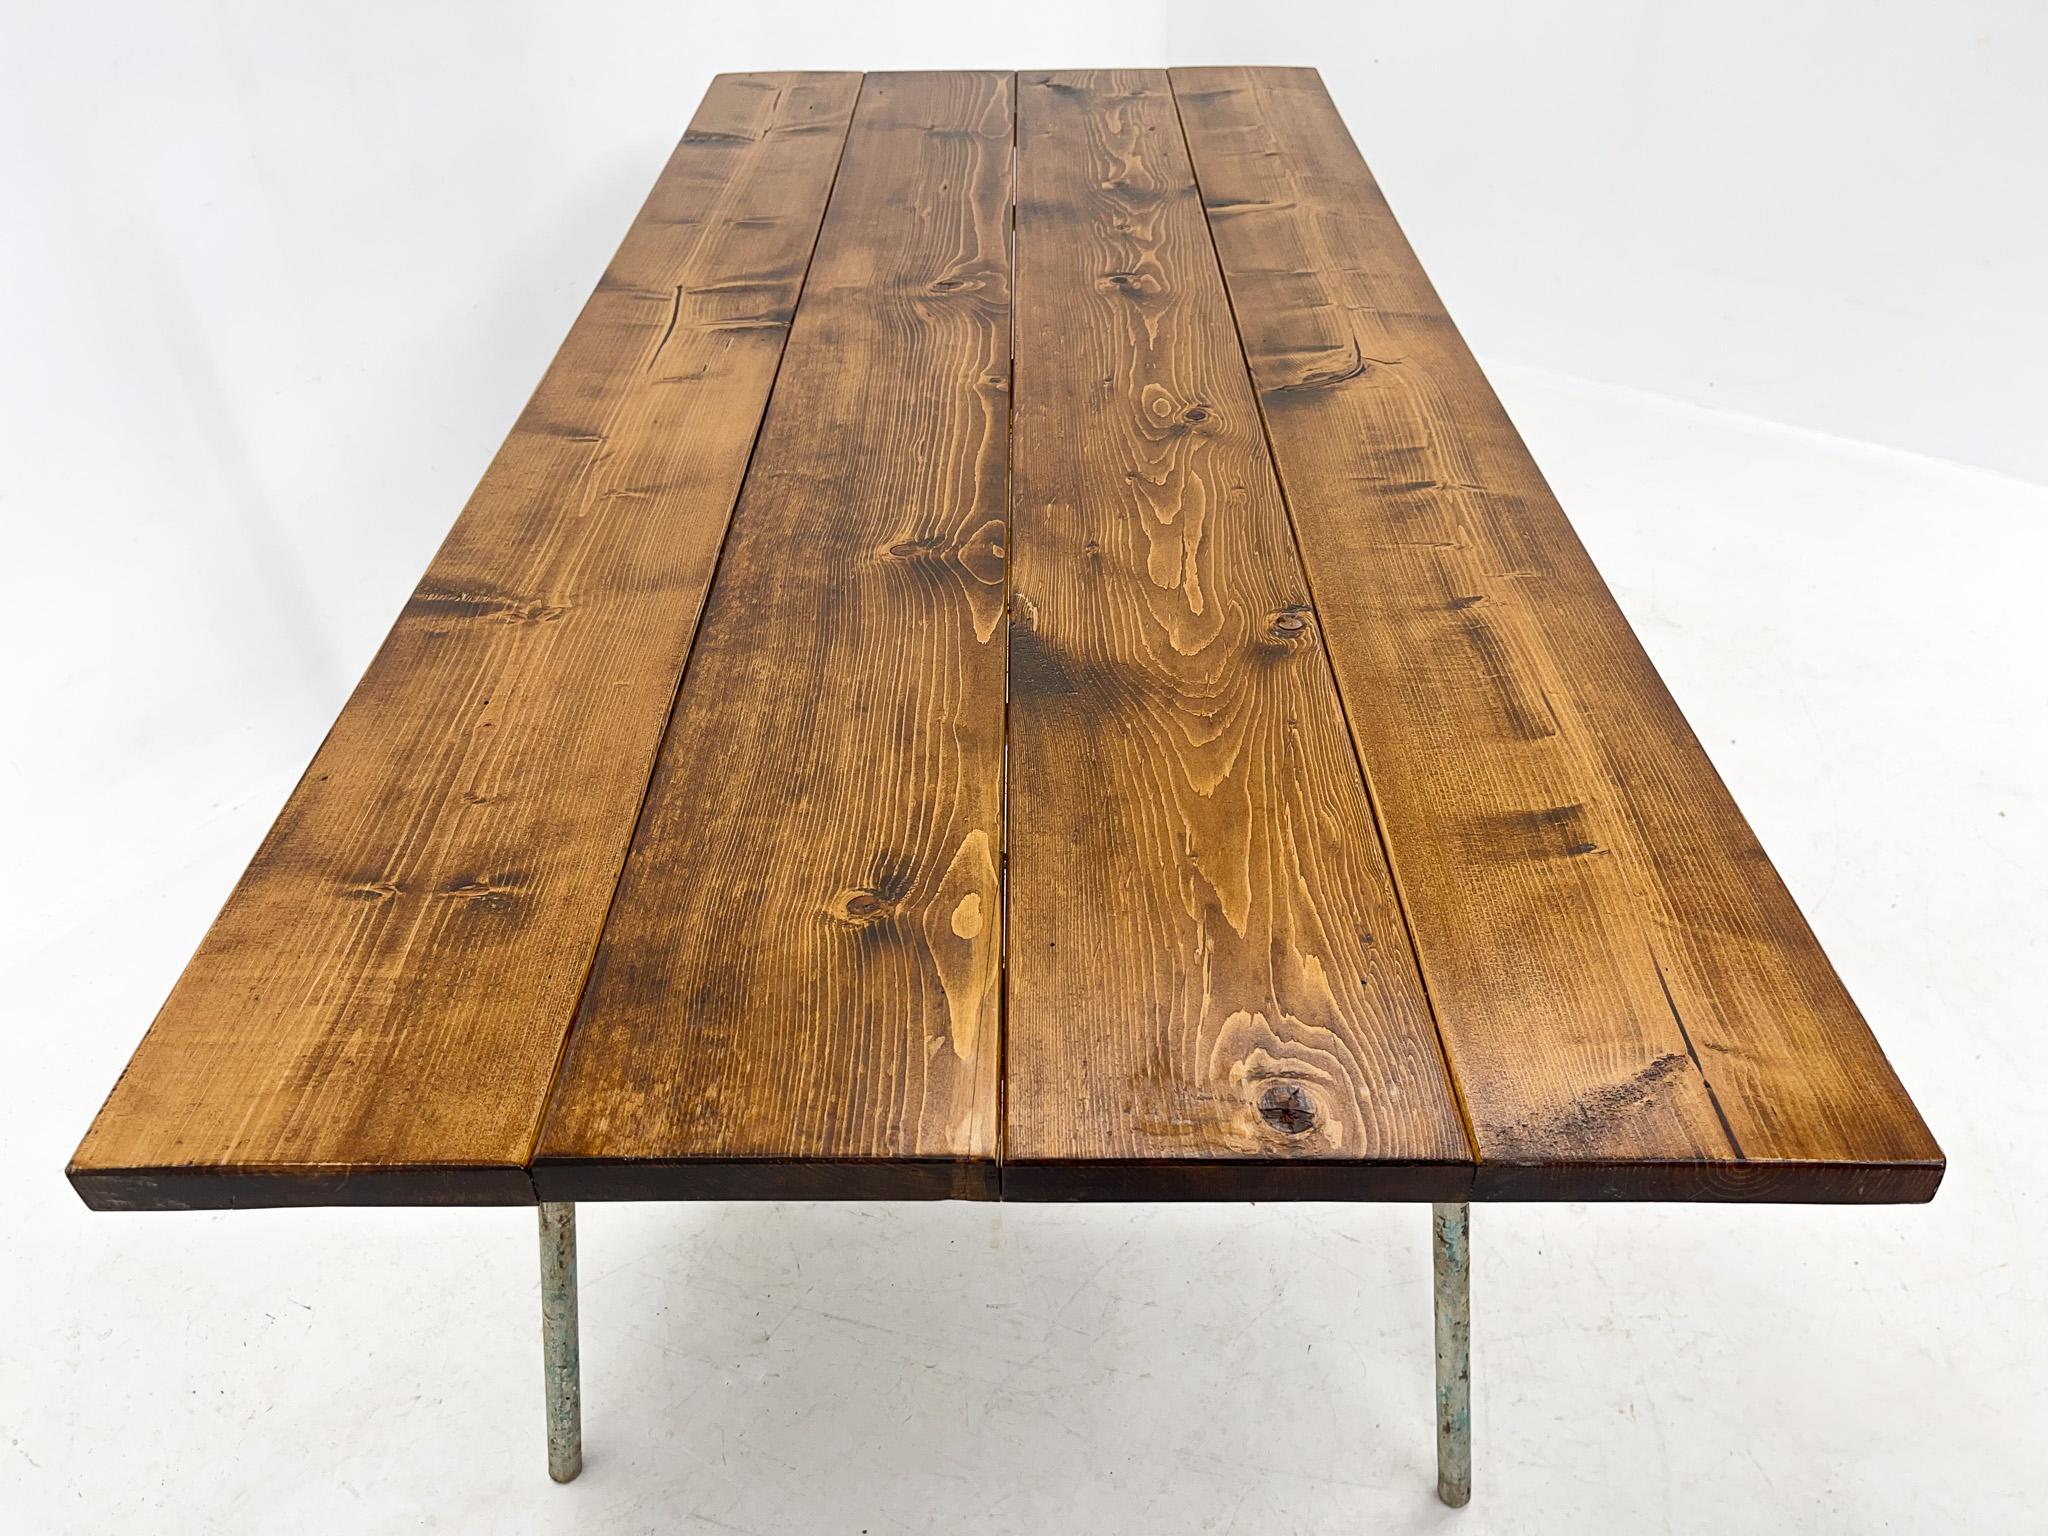 Vintage Indrustrial Wood & Metal Dining Table For Sale 3